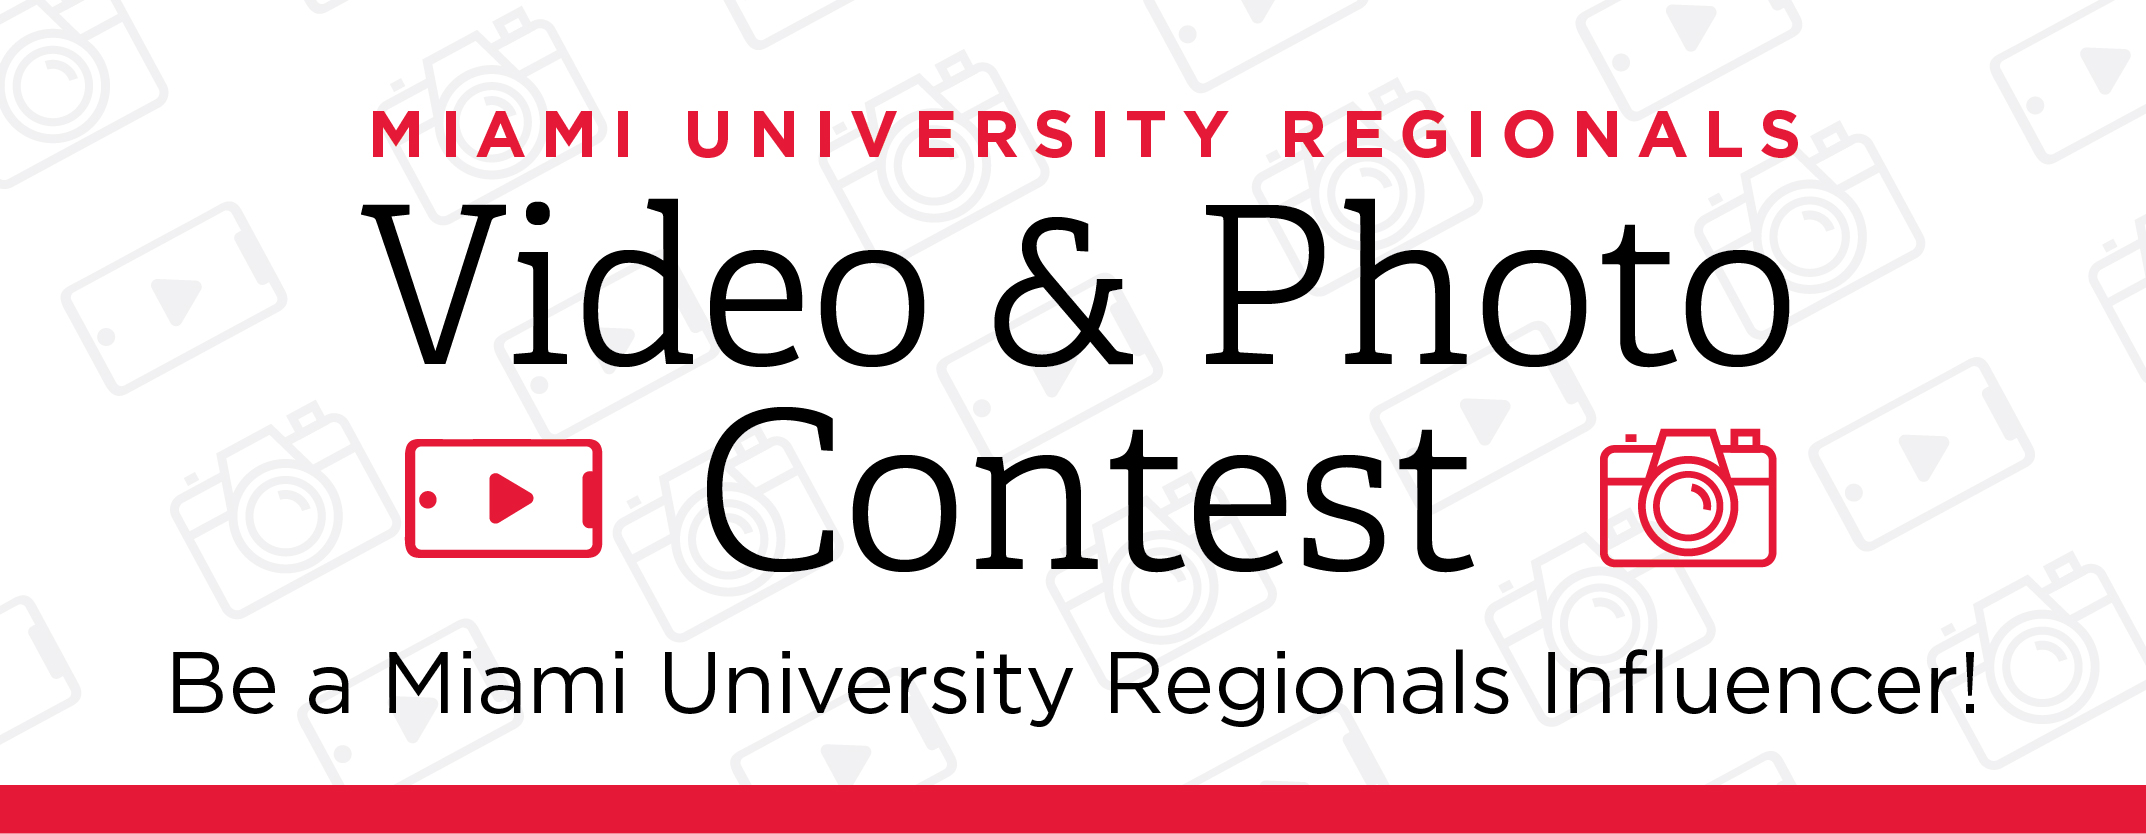 Miami University Regionals Video & Photo Contest. Be a Miami University Regionals Influencer